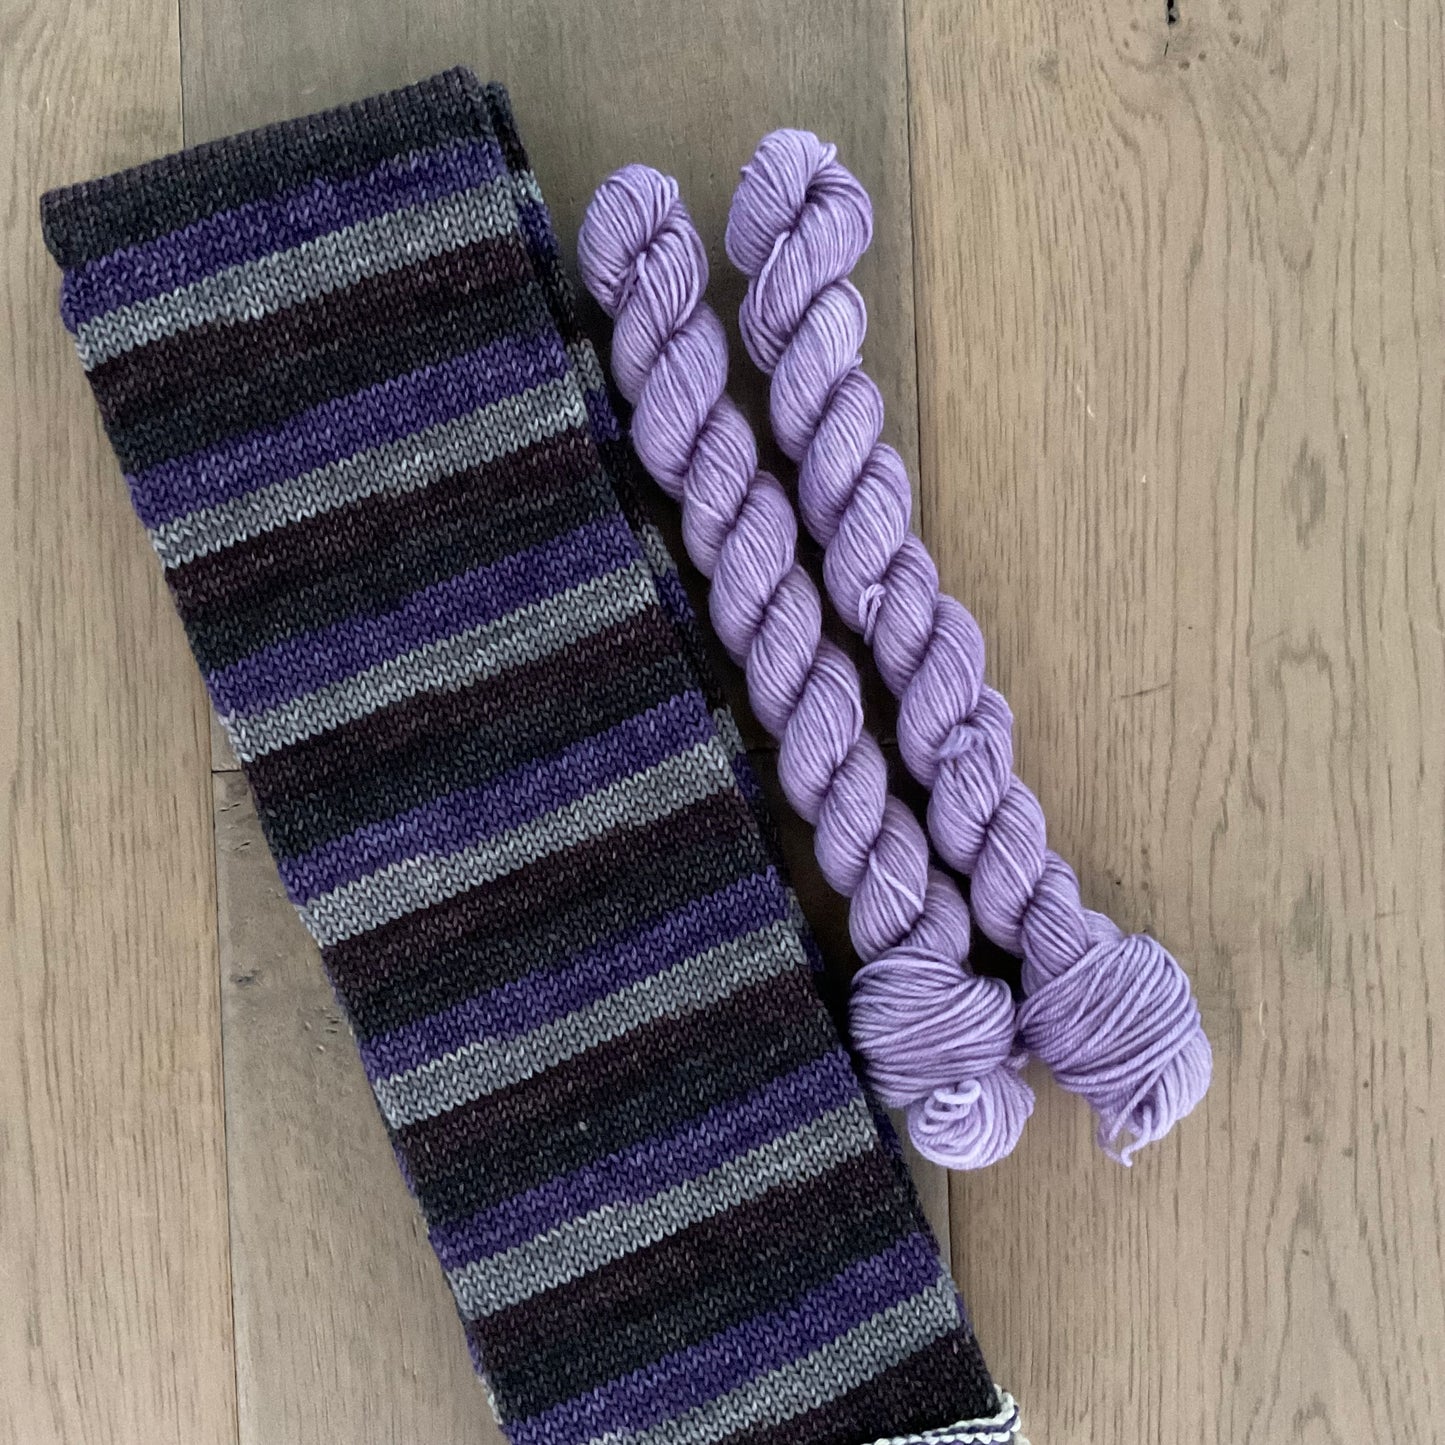 Cranked Discontinued Self-Striping Sock Sets